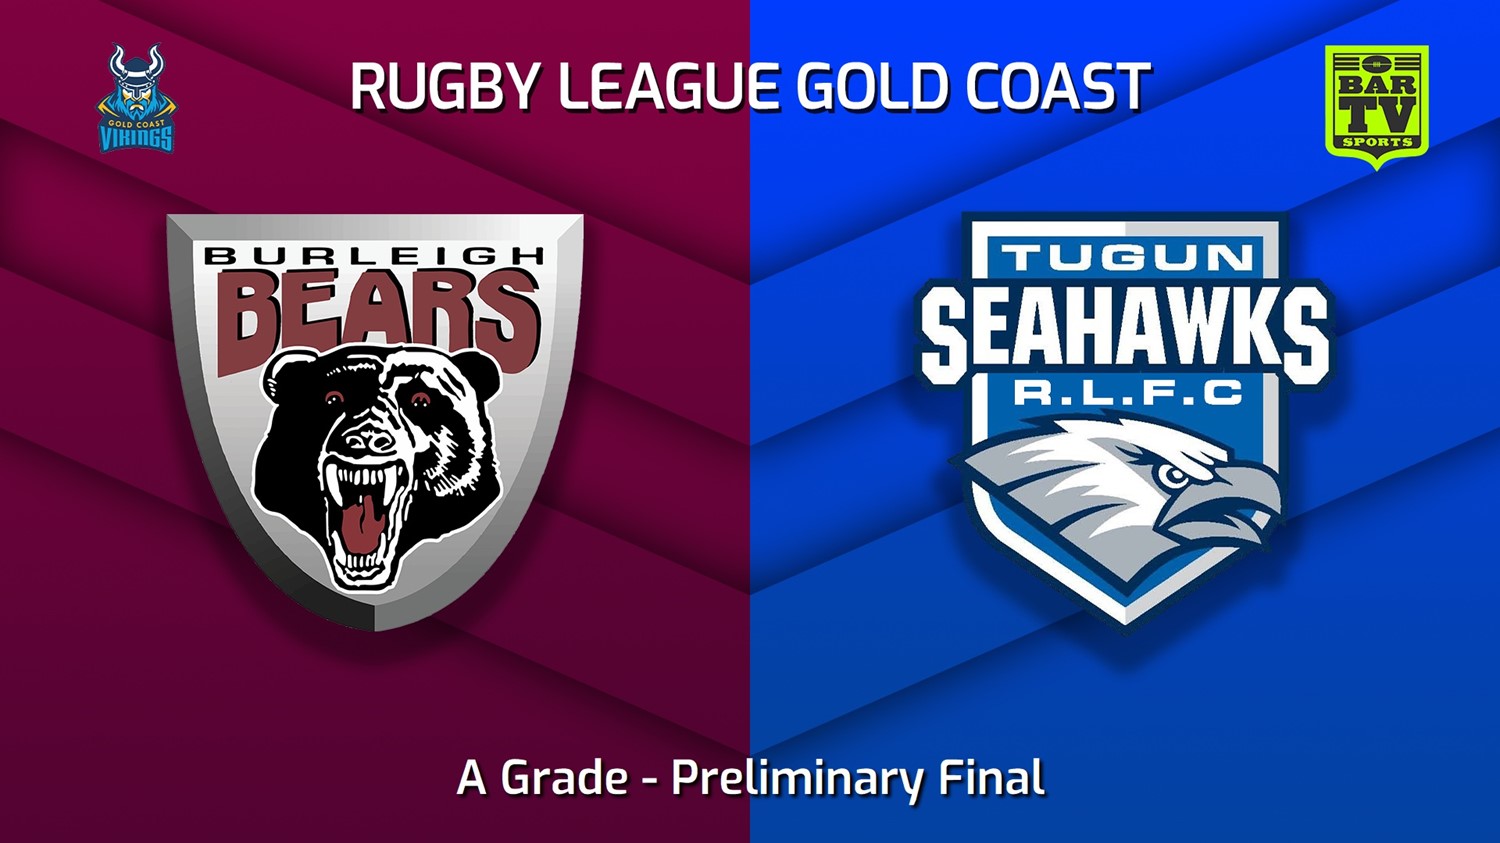 220911-Gold Coast Preliminary Final - A Grade - Burleigh Bears v Tugun Seahawks Minigame Slate Image